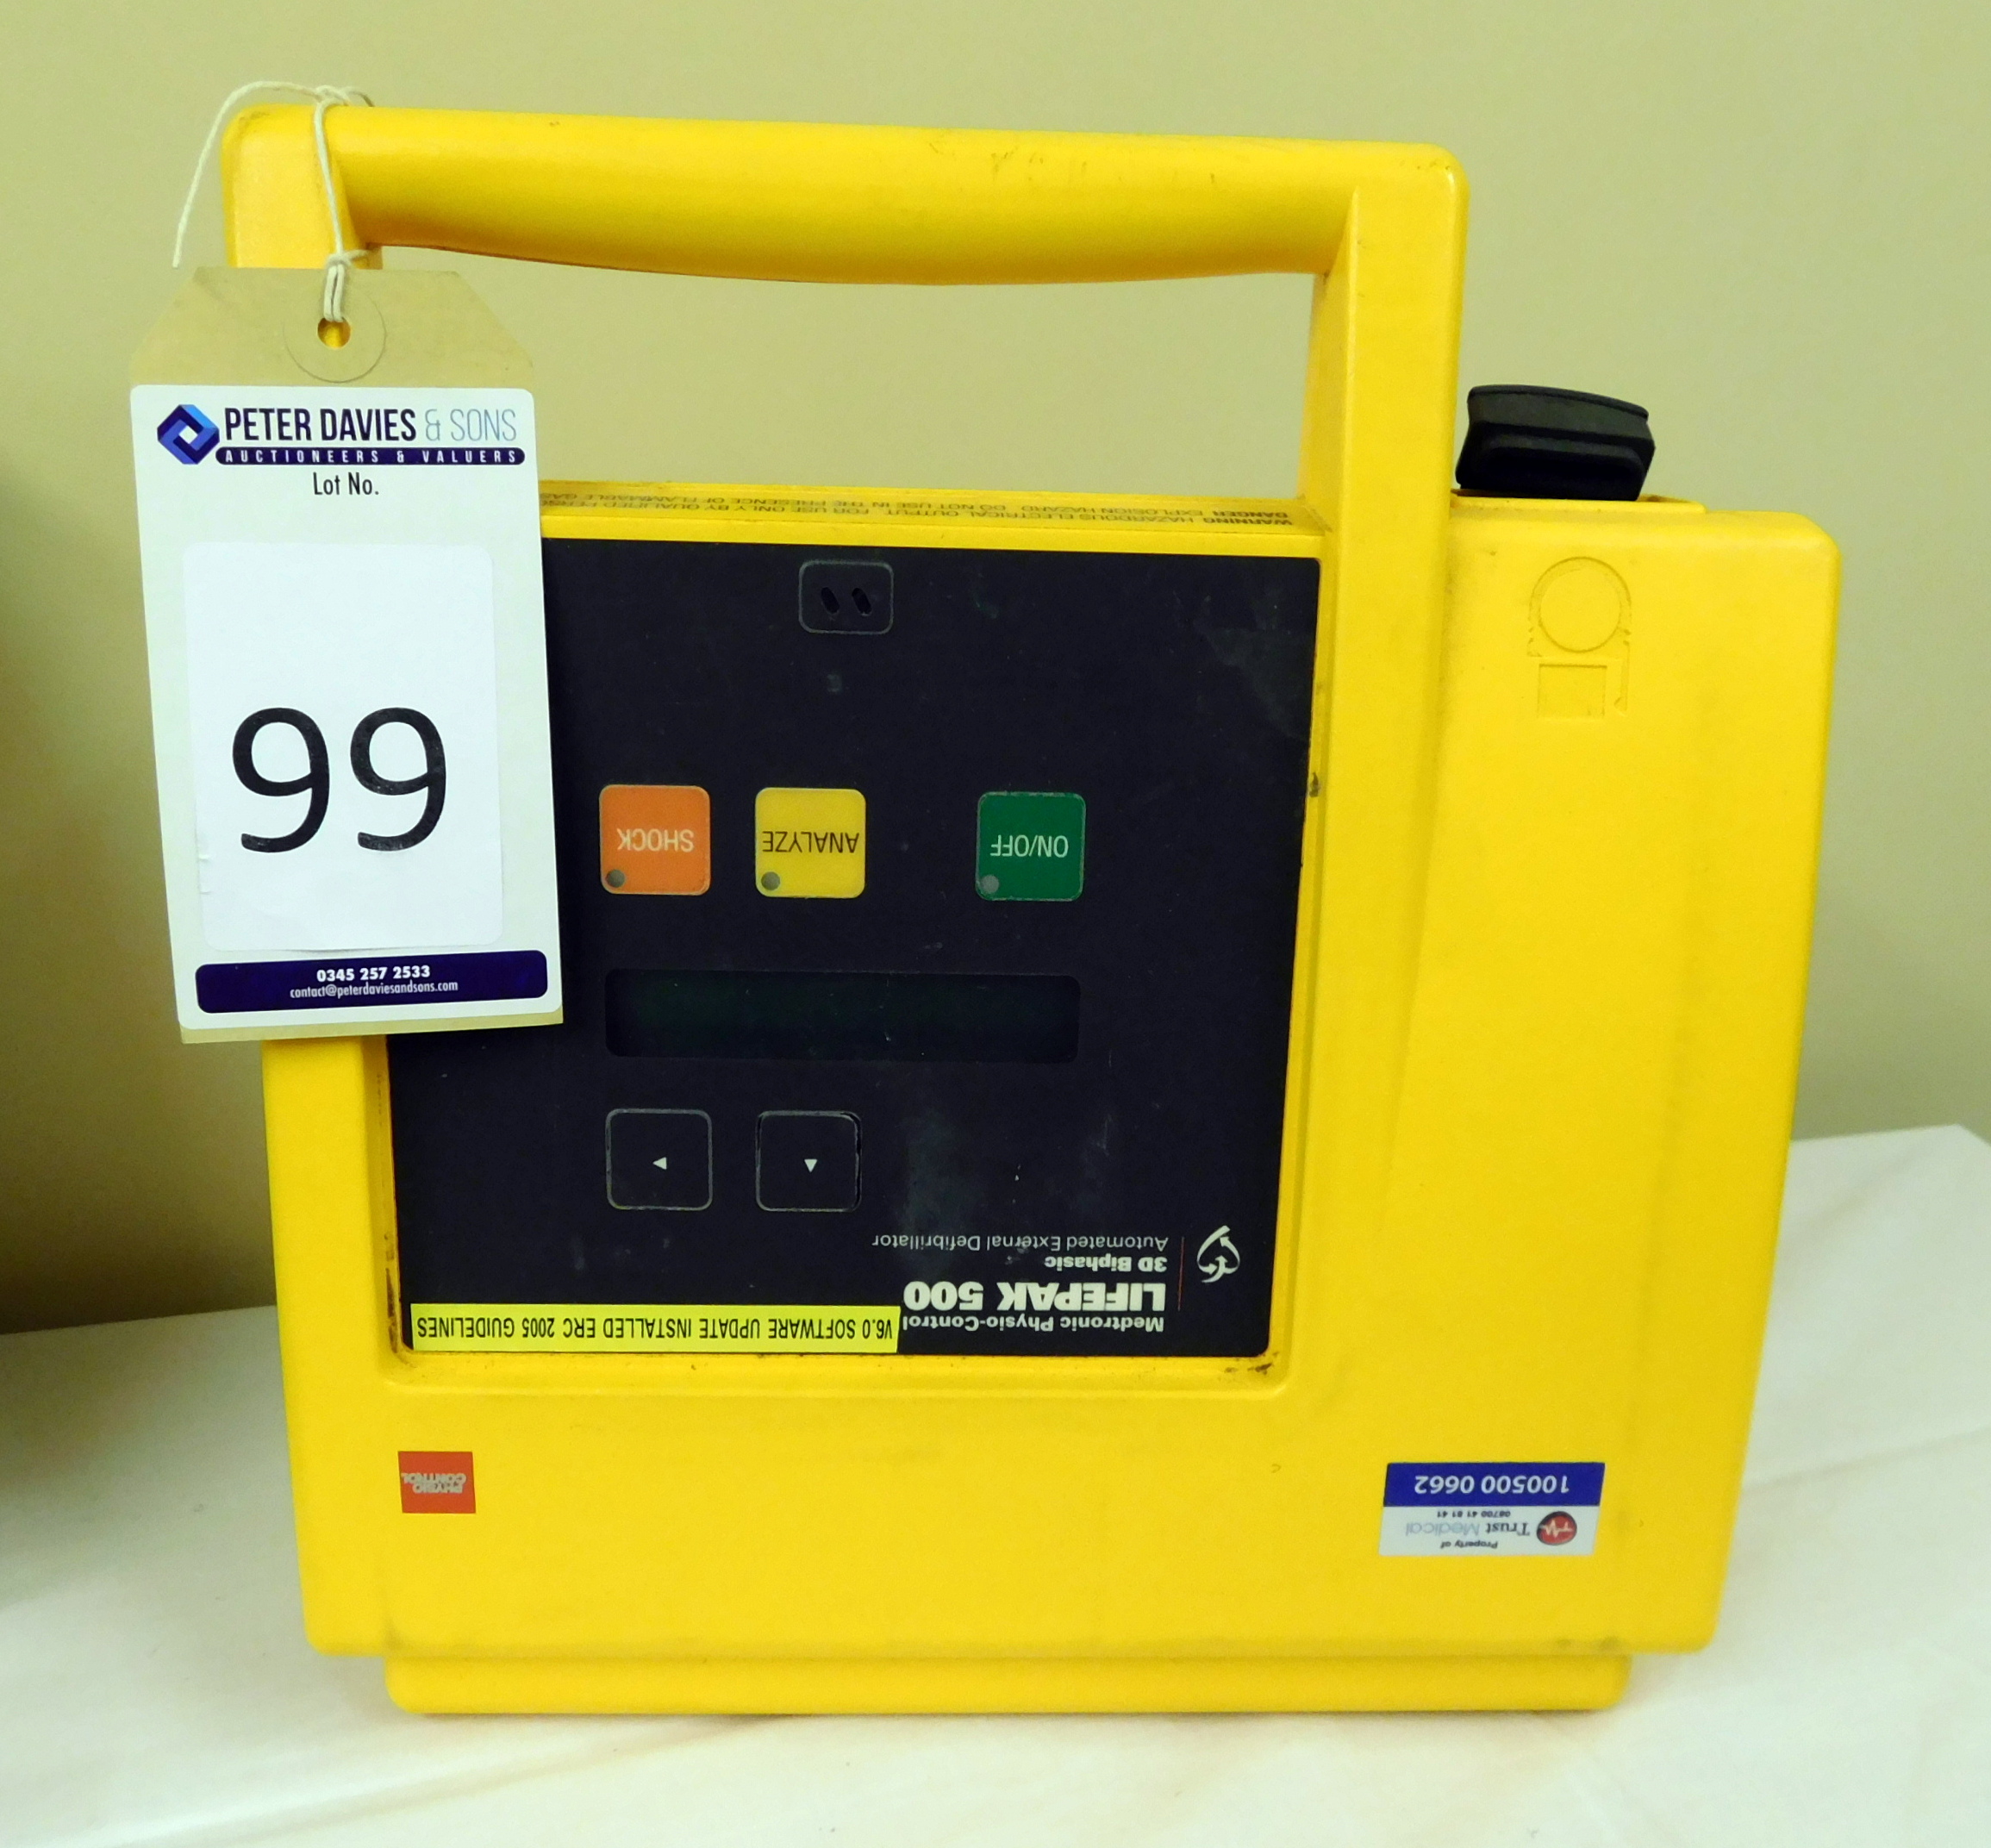 Medtronic Lifepak 500 Defibrillator, Serial Number: 11795426, Asset Number: 1005000662